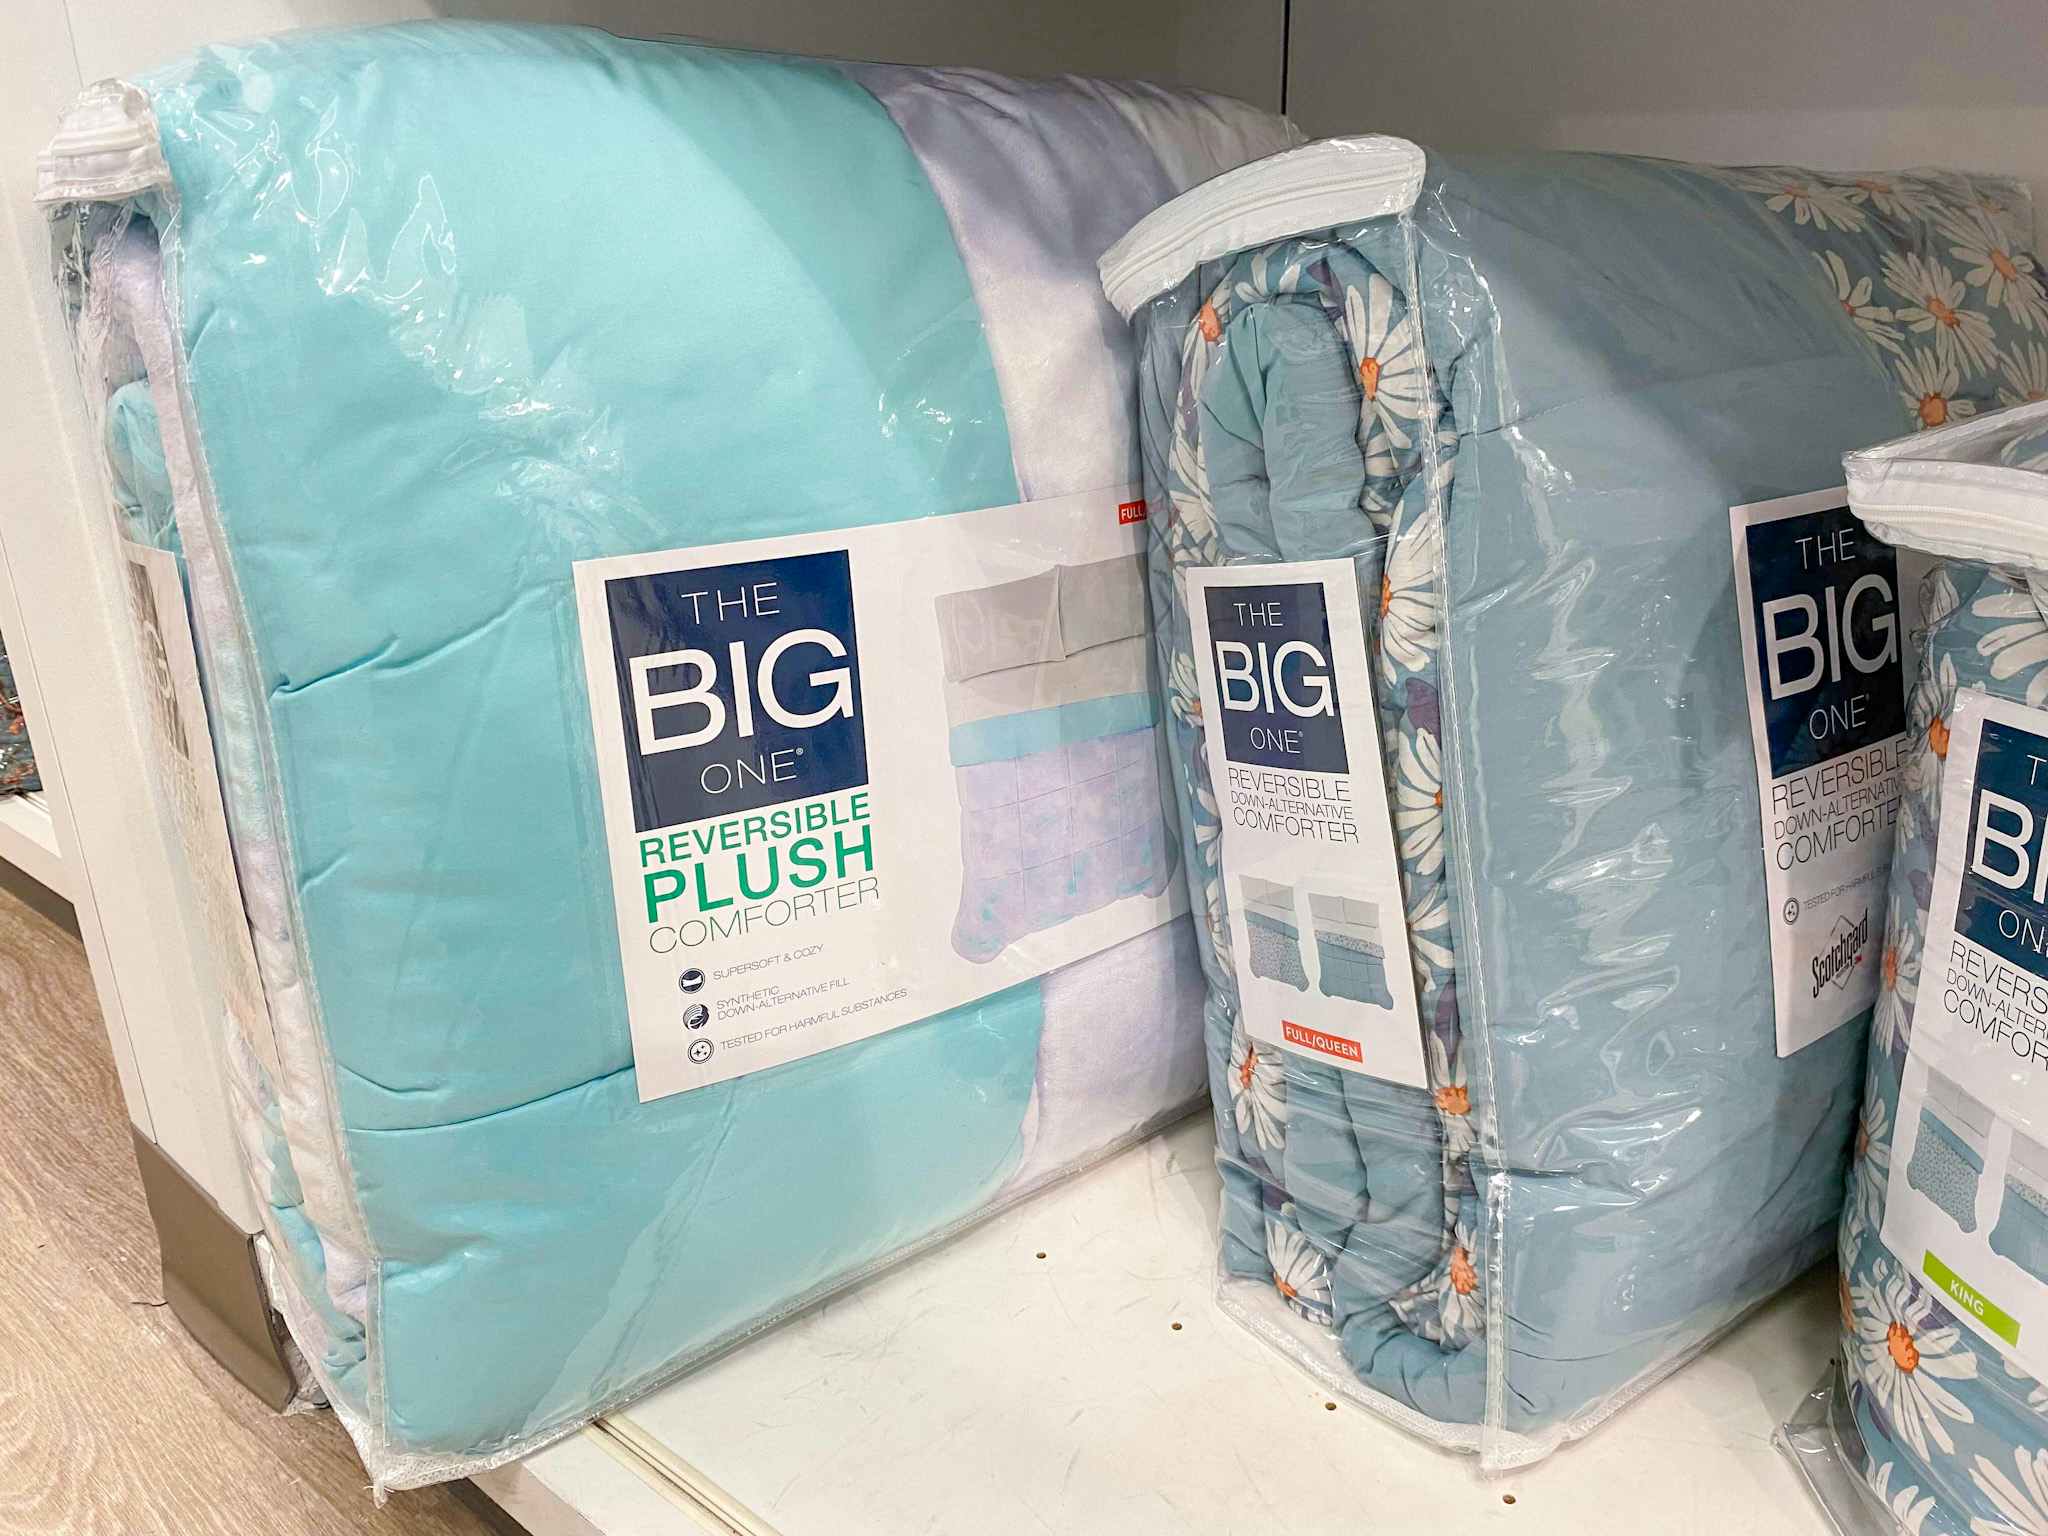 kohls the big one plush reversible down alternative comforter in store image 2021 1